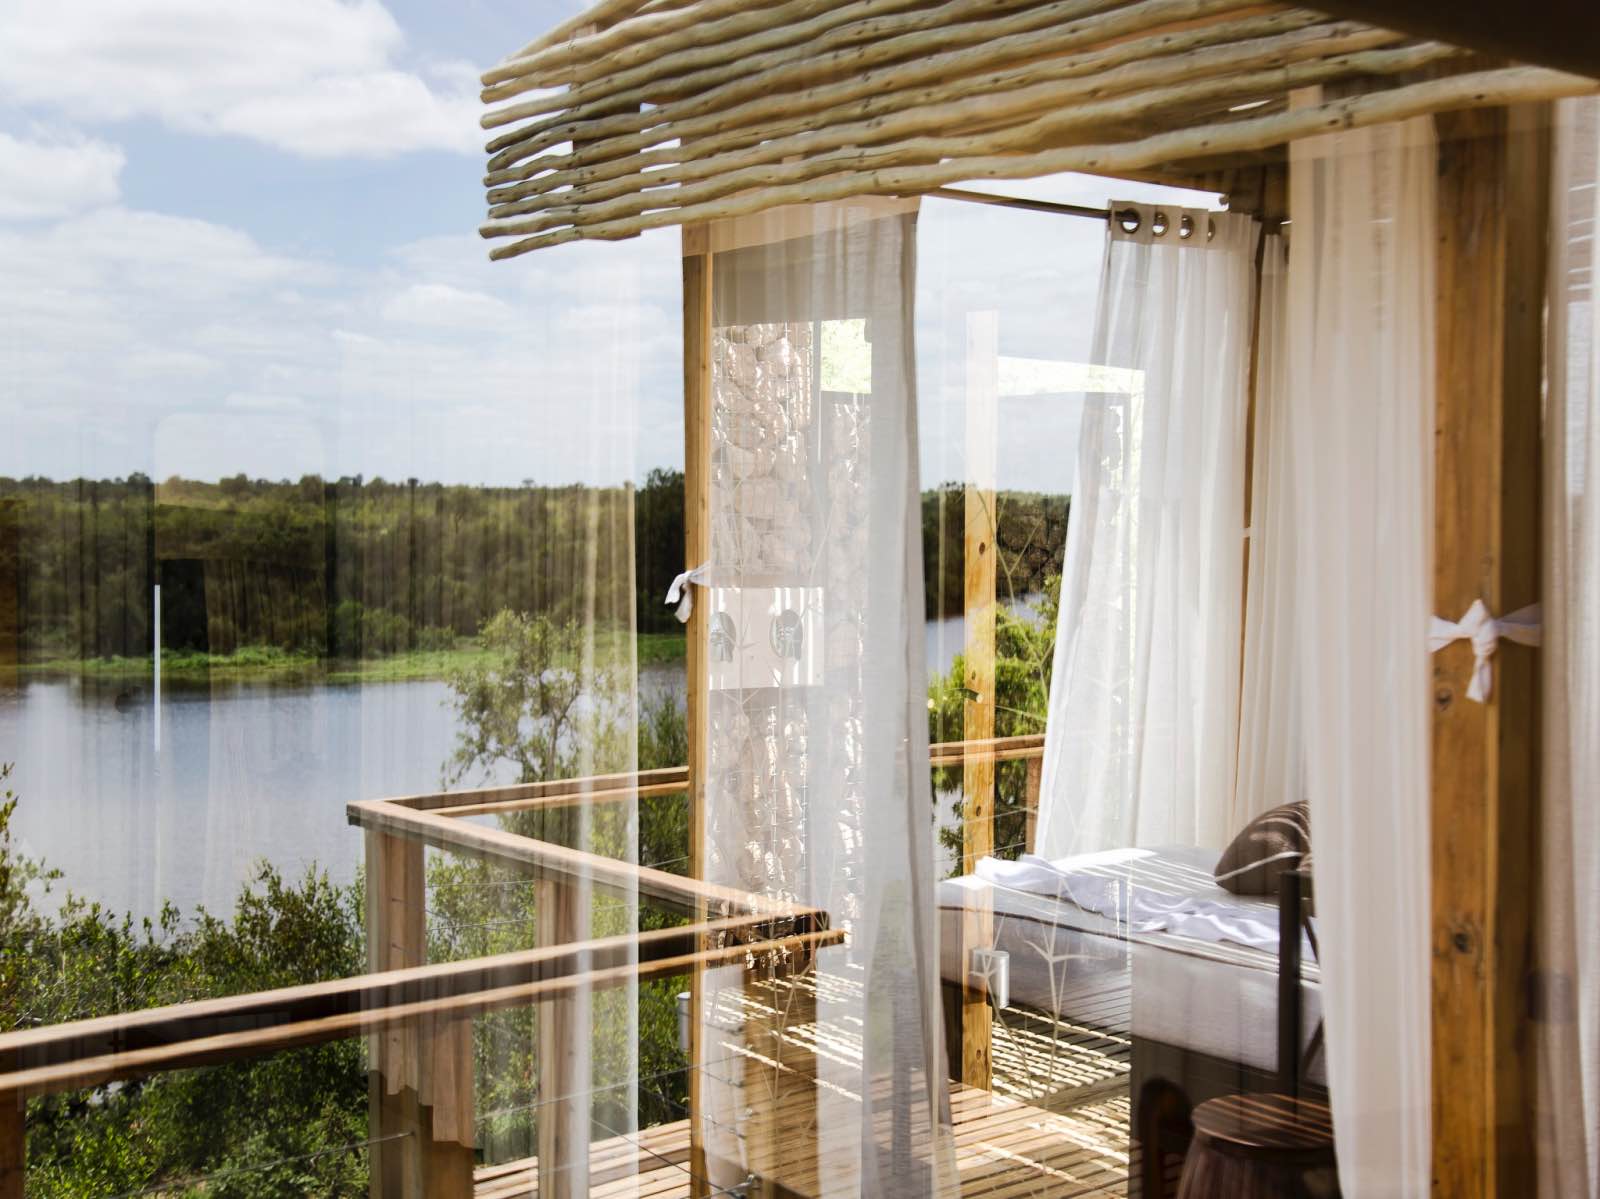 Simbavati Hilltop Lodge romantic outdoor bedroom with views of the river below